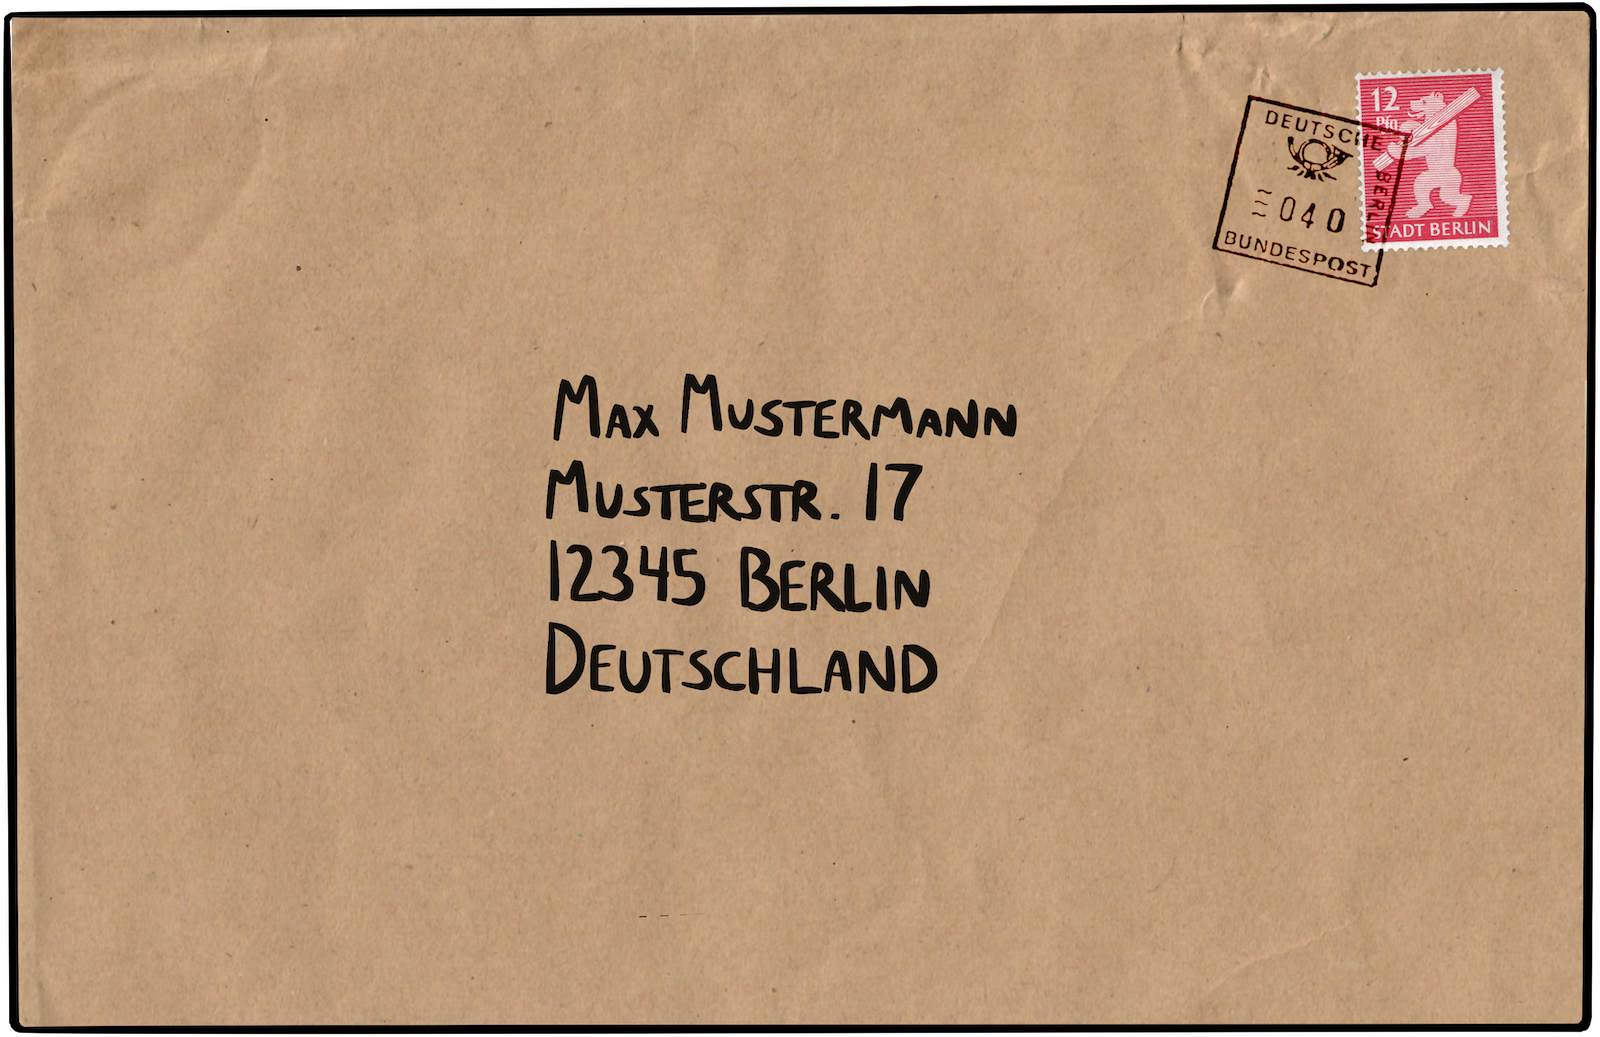 Envelope with German address